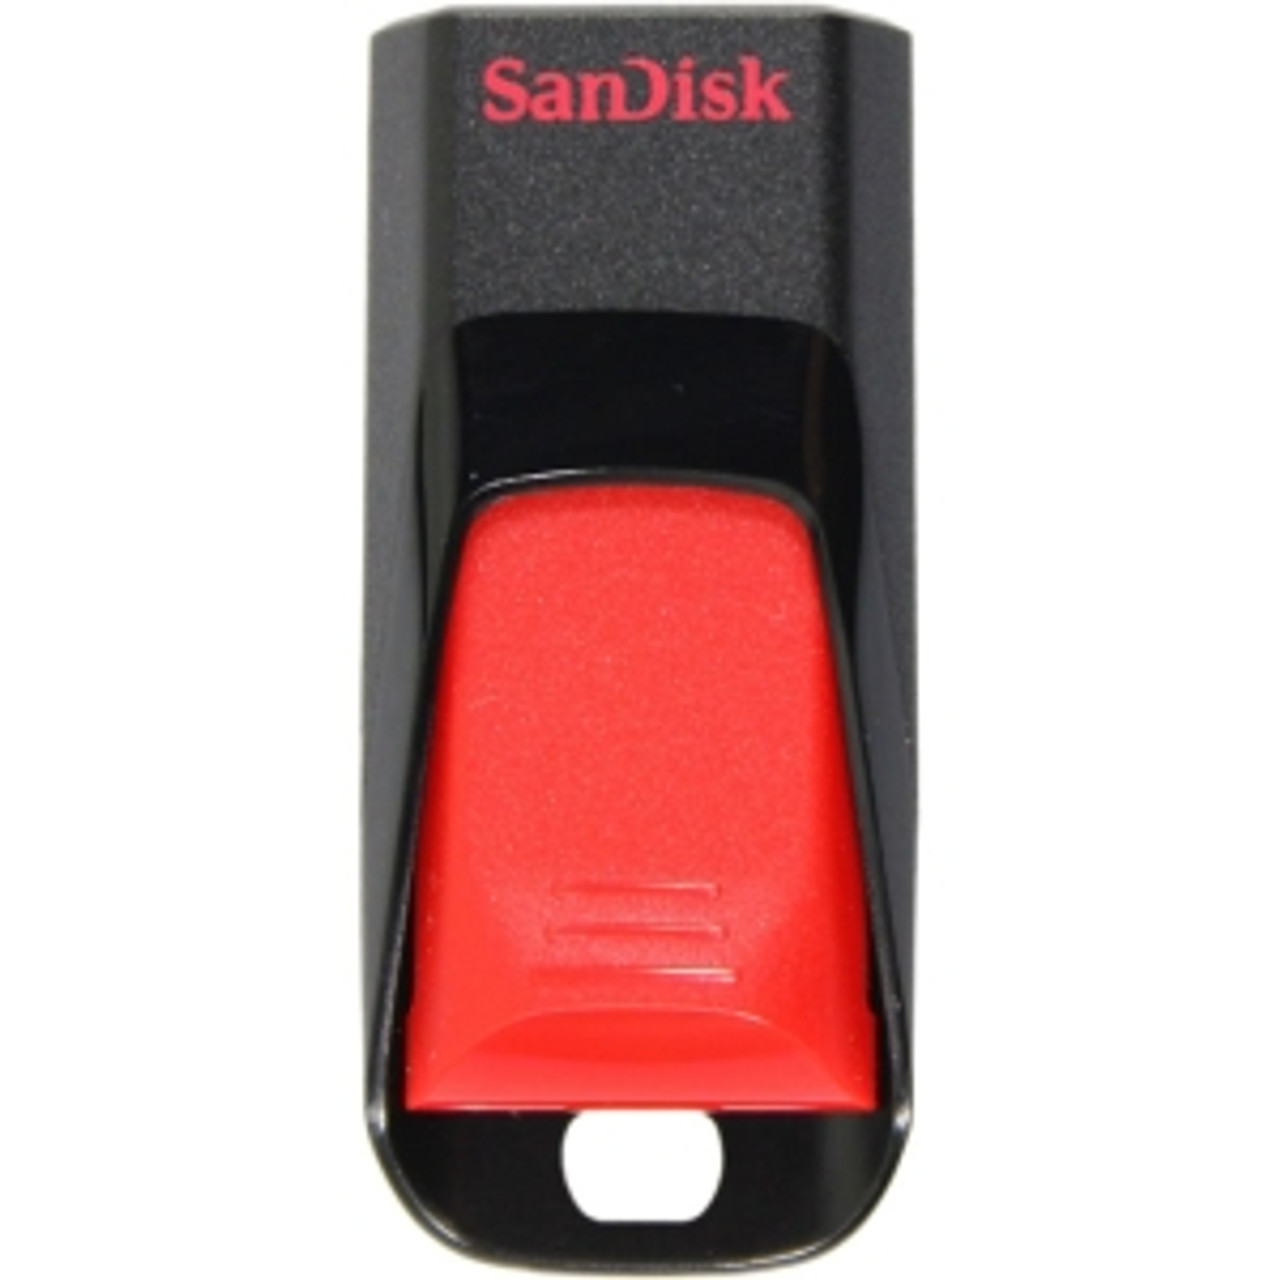 SDCZ51-032G-A11 - SanDisk Cruzer Edge SDCZ51-032G-A11 32 GB USB 2.0 Flash Drive - Red - 1 Pack - External